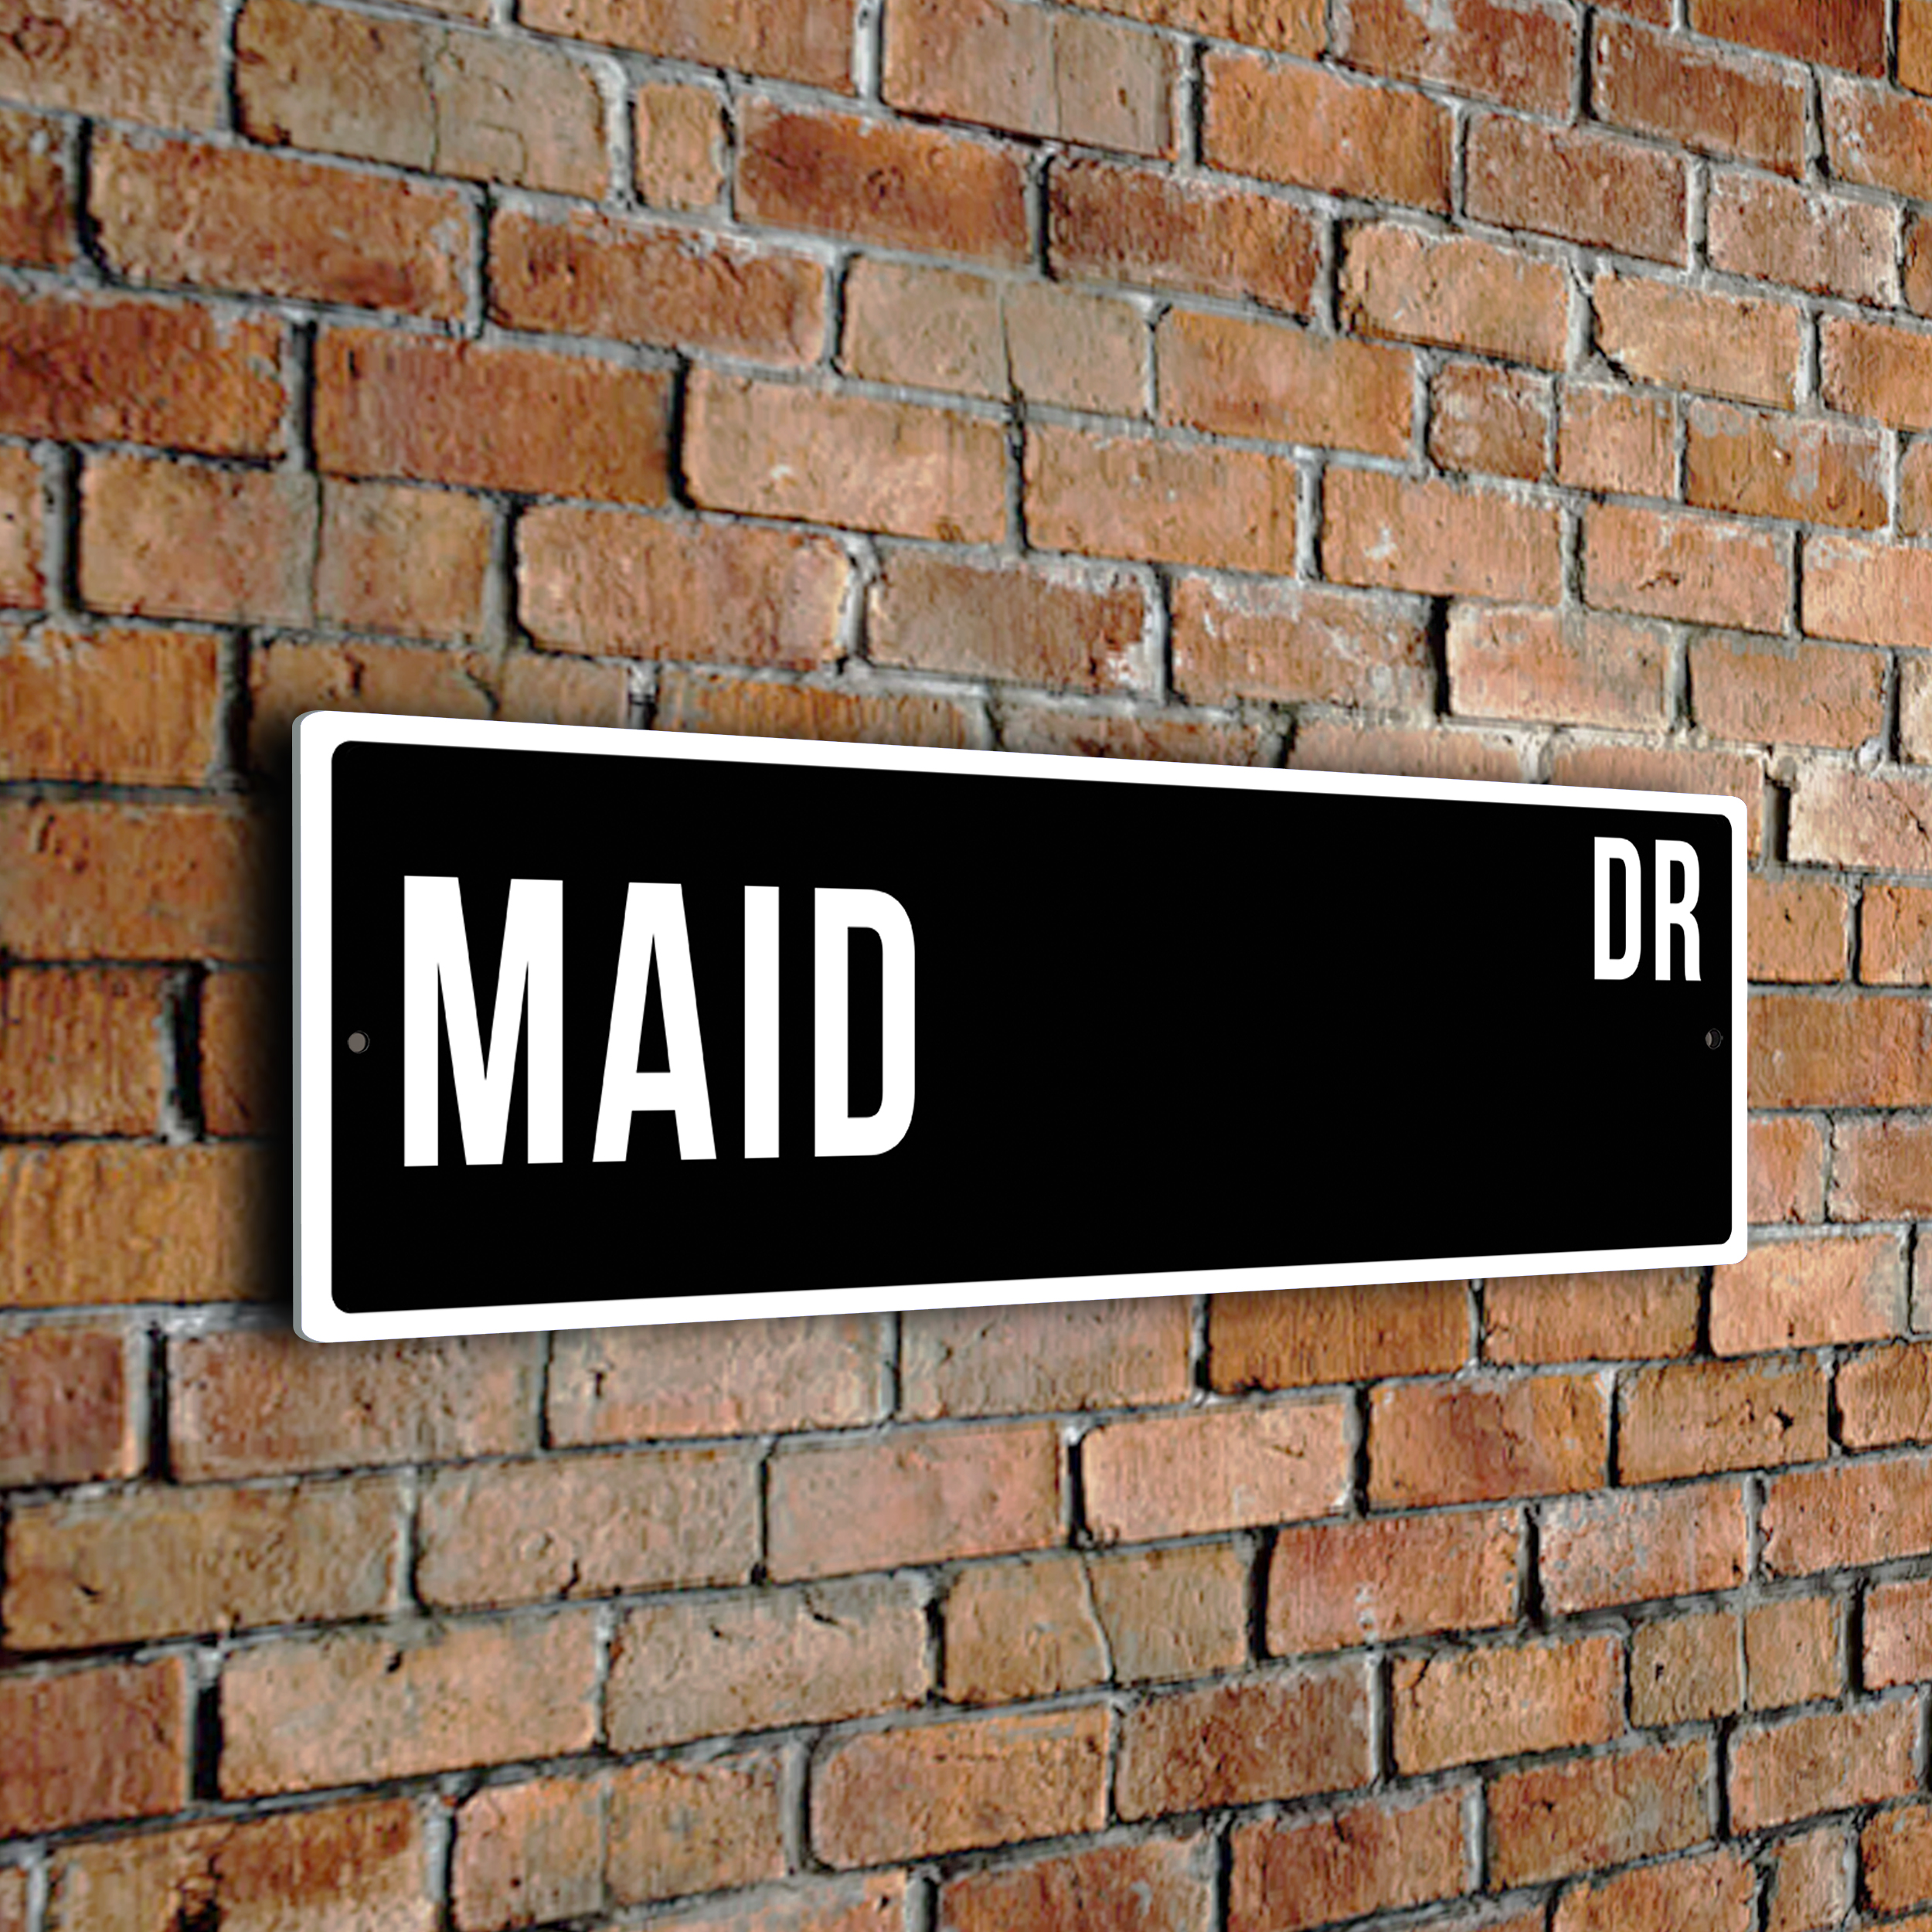 Maid street sign